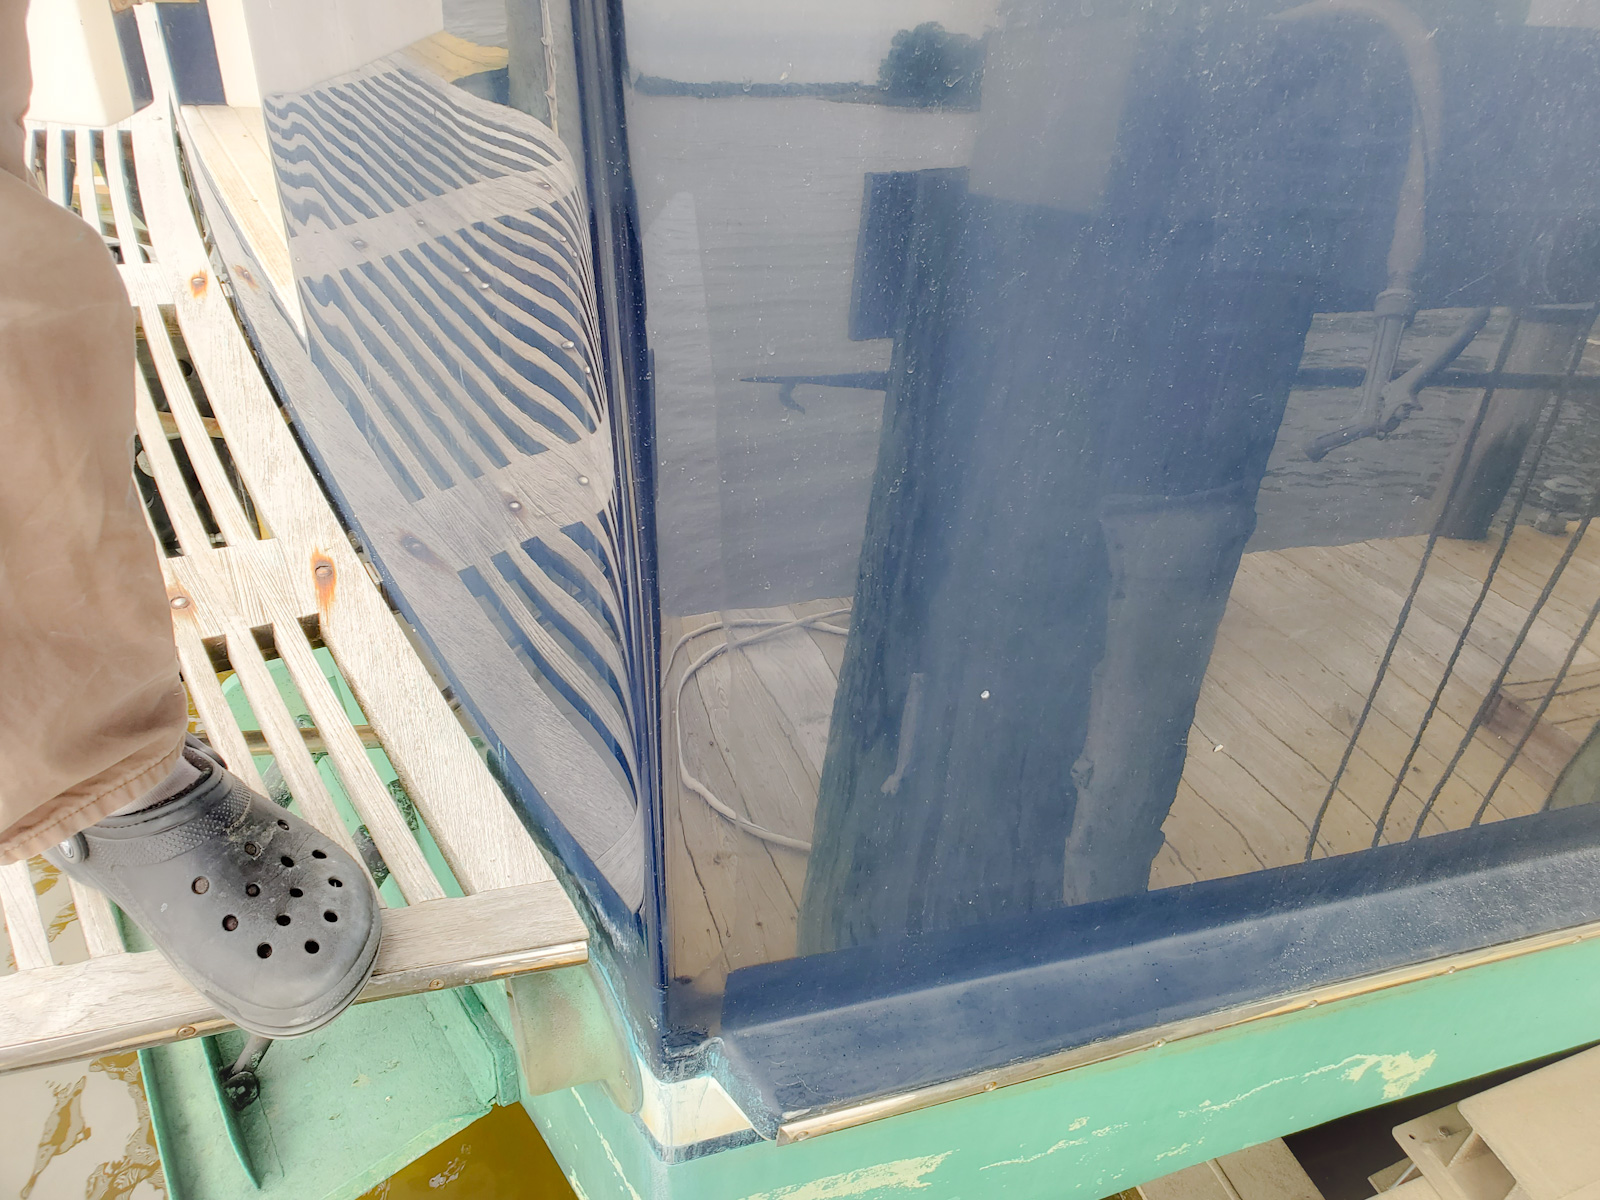 Awlgrip Boat Paint Repair